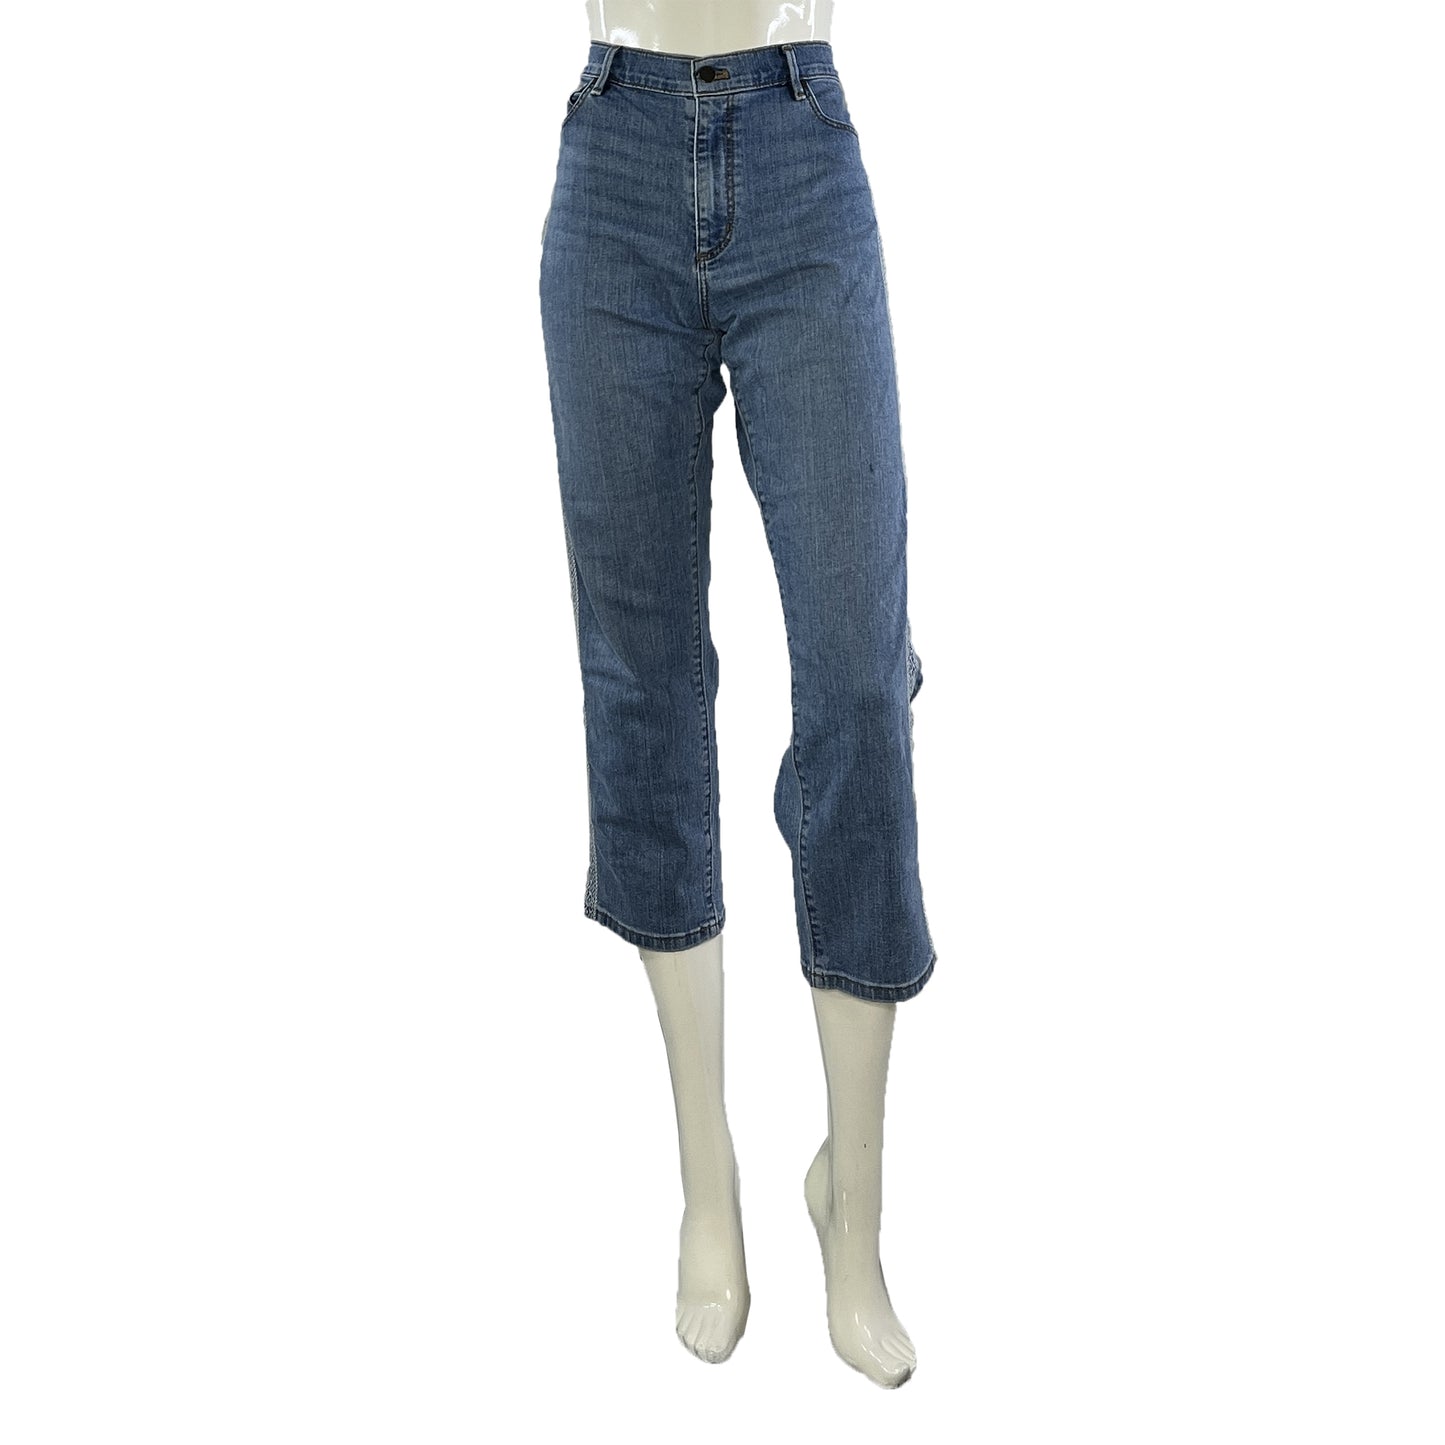 Ann Taylor Denim Capri Jeans Light Blue Size 6 SKU 000423-1